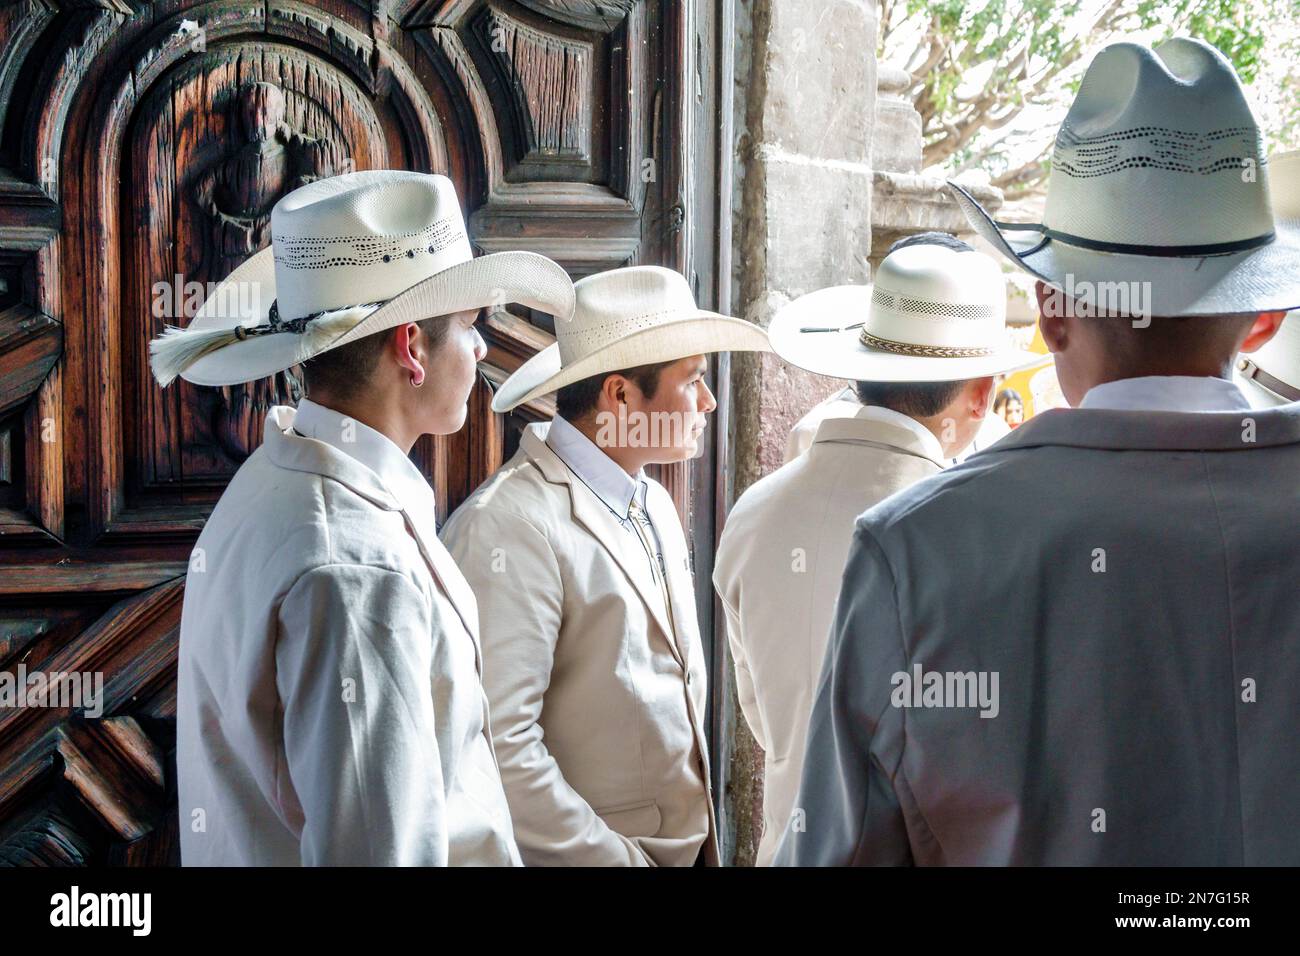 San Miguel de Allende Guanajuato Mexico,Historico Central historic center Zona Centro,theme party guests wearing cowboy hat hats sombrero sombreros,qu Stock Photo